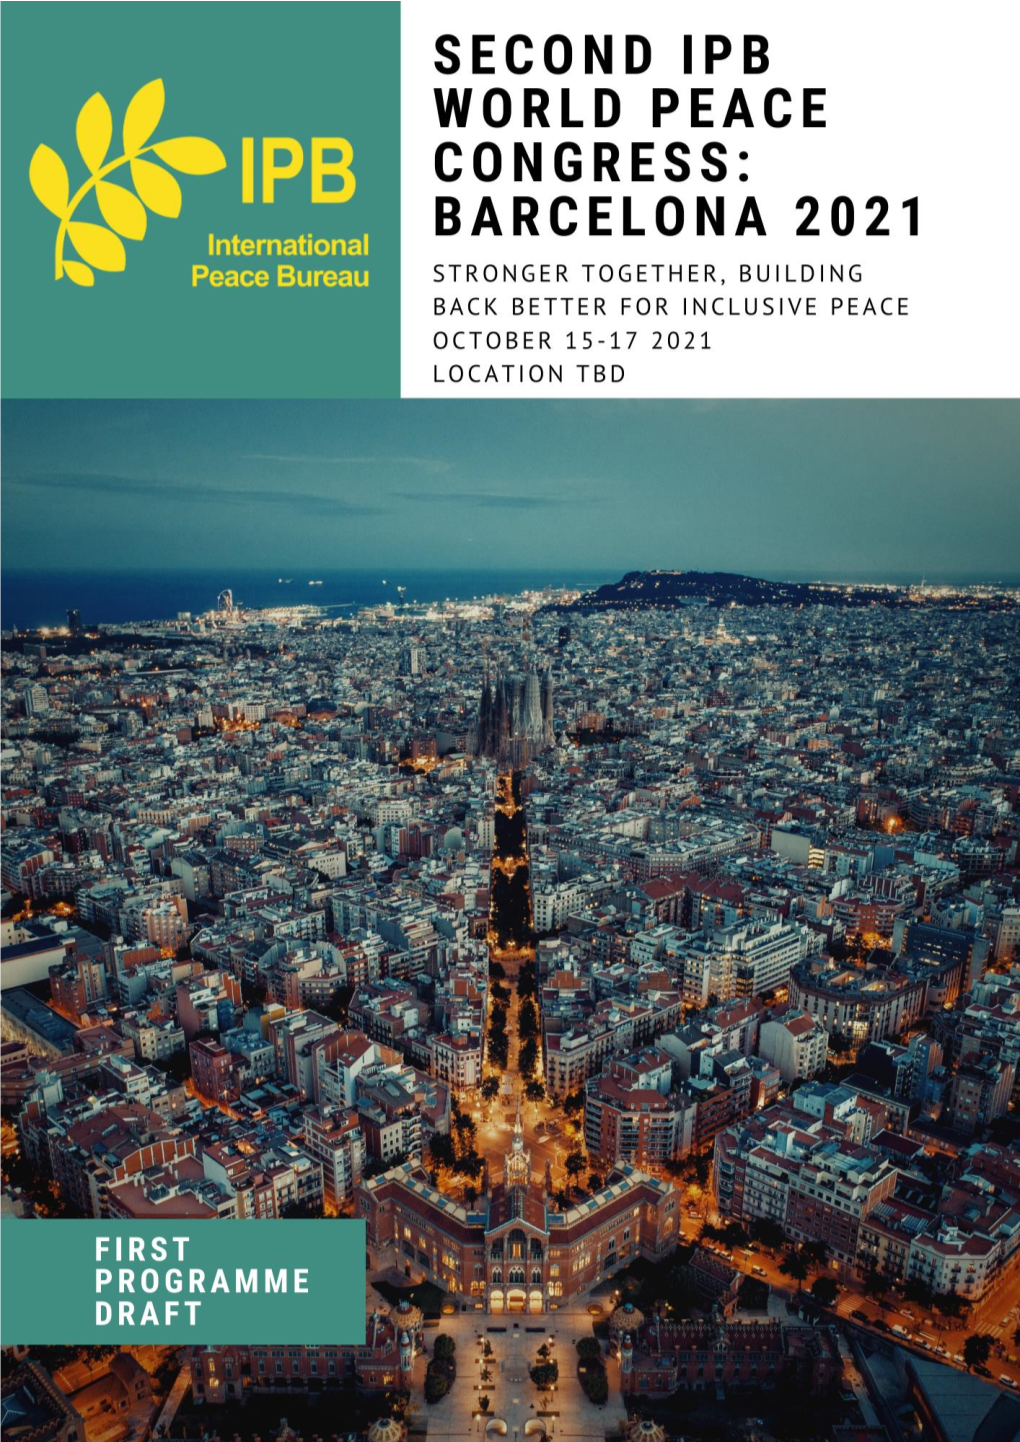 Second IPB World Peace Congress Barcelona 2021 First Program Draft